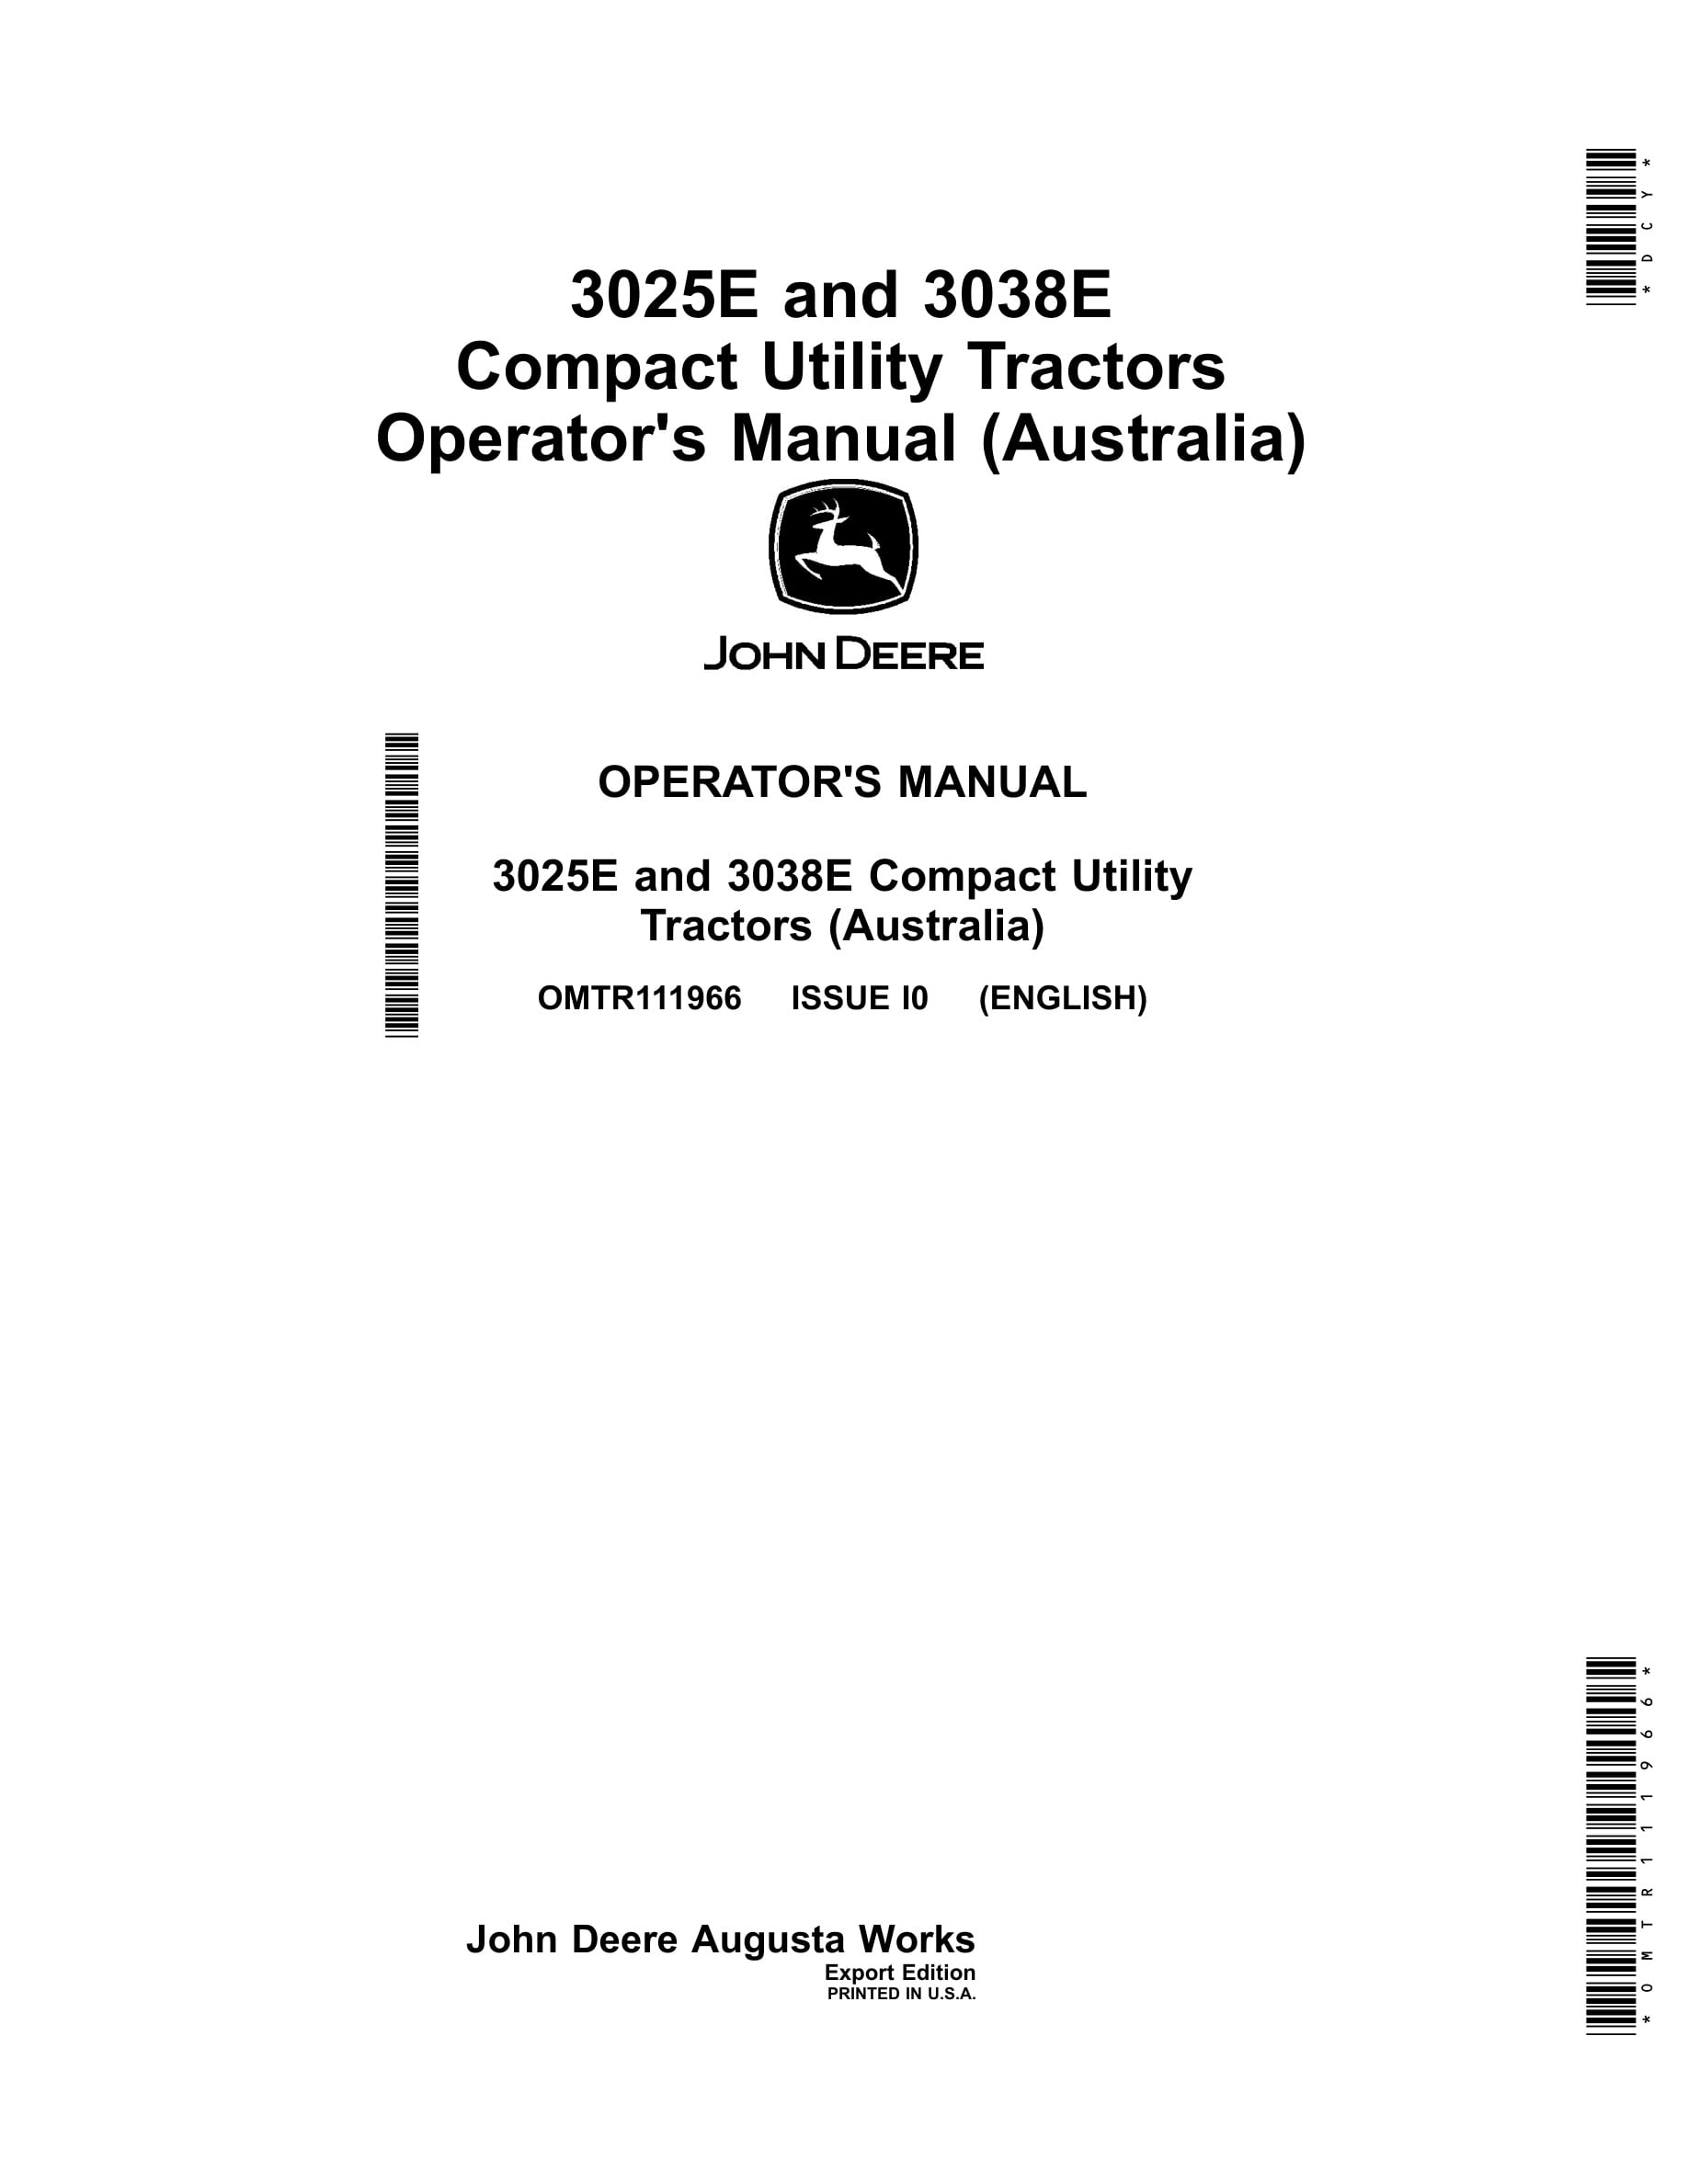 John Deere 3025e And 3038e Compact Utility Tractors Operator Manuals OMTR111966-1